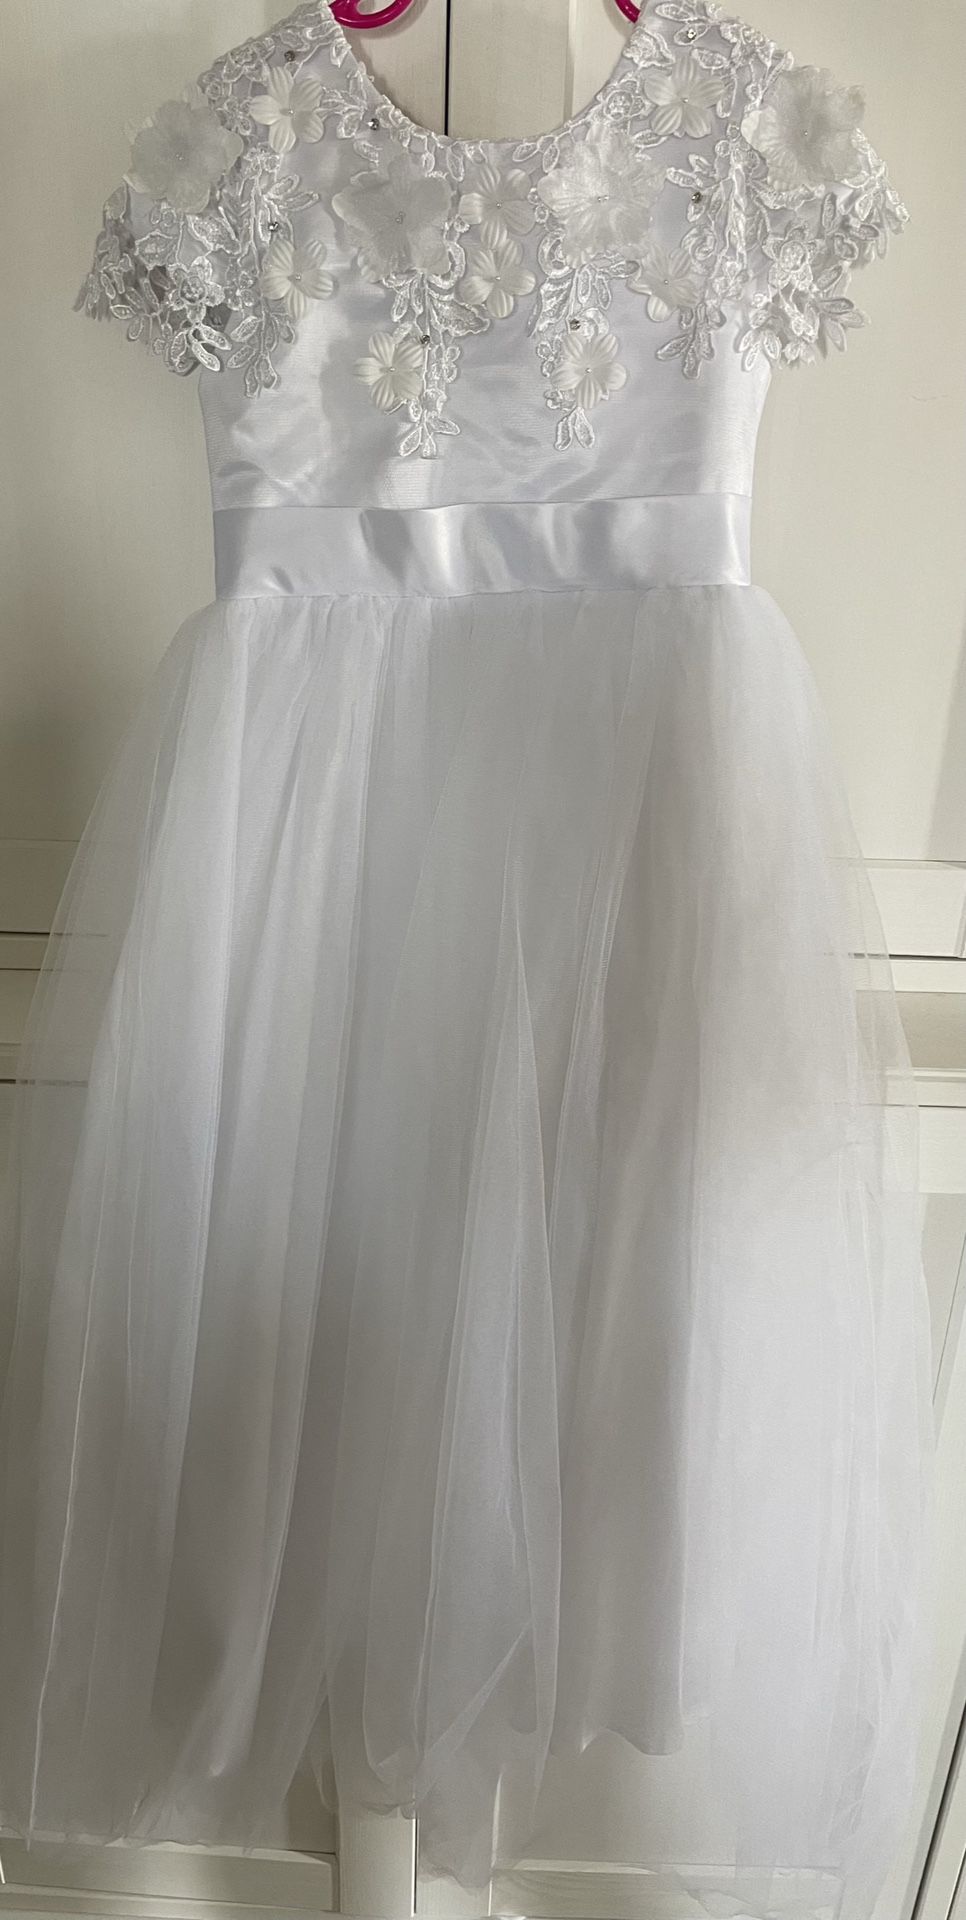 Girls Size 6/7 White Flower Girl/ Princess Dress Up / First Communion Dress